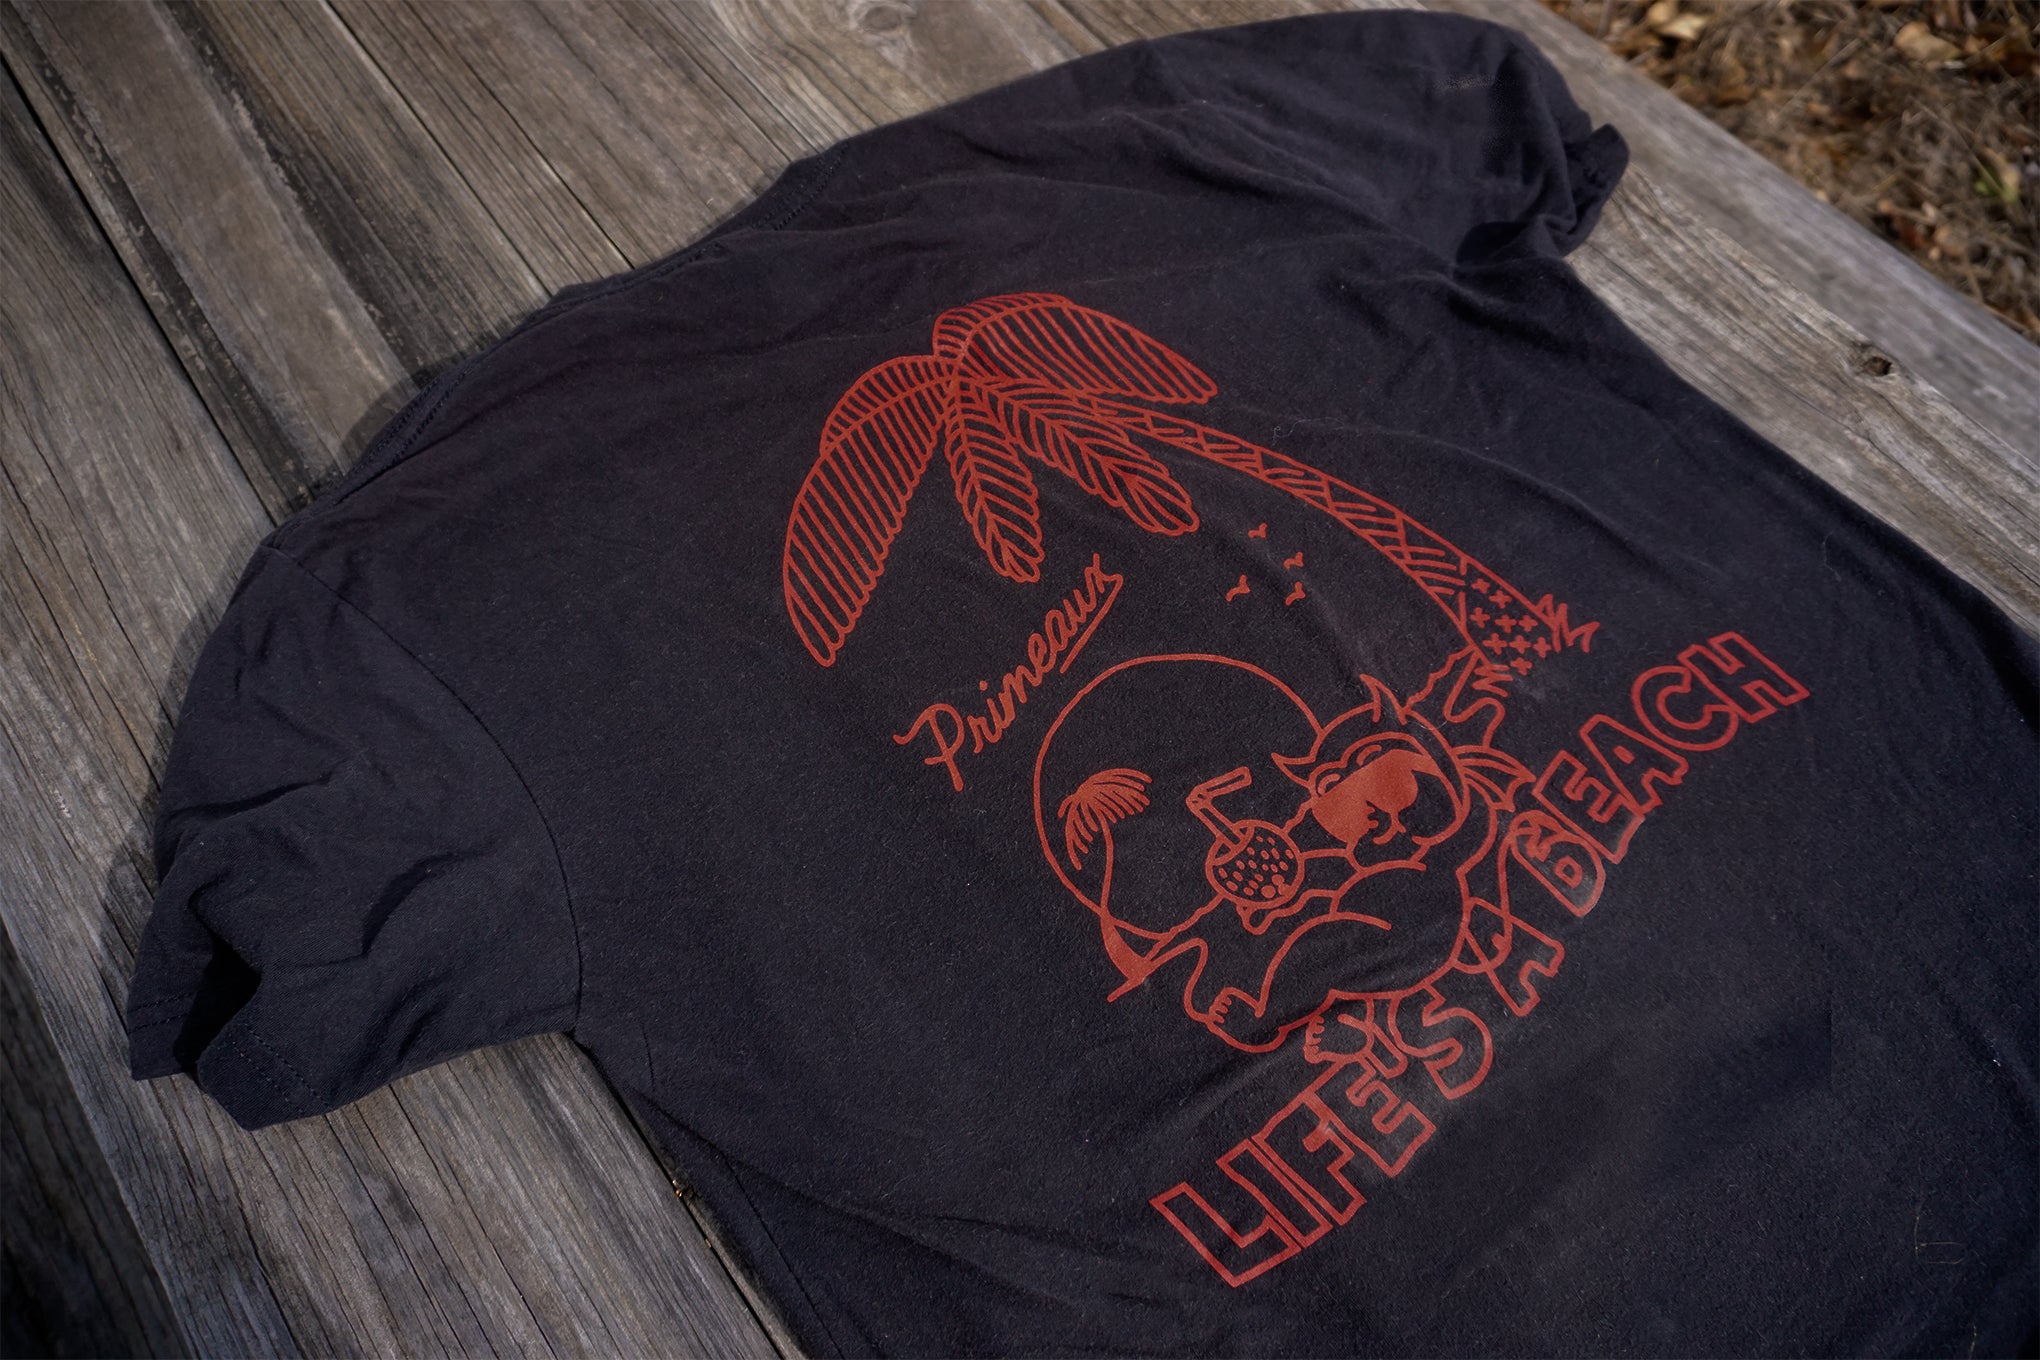 "Life's a beach" T-shirt